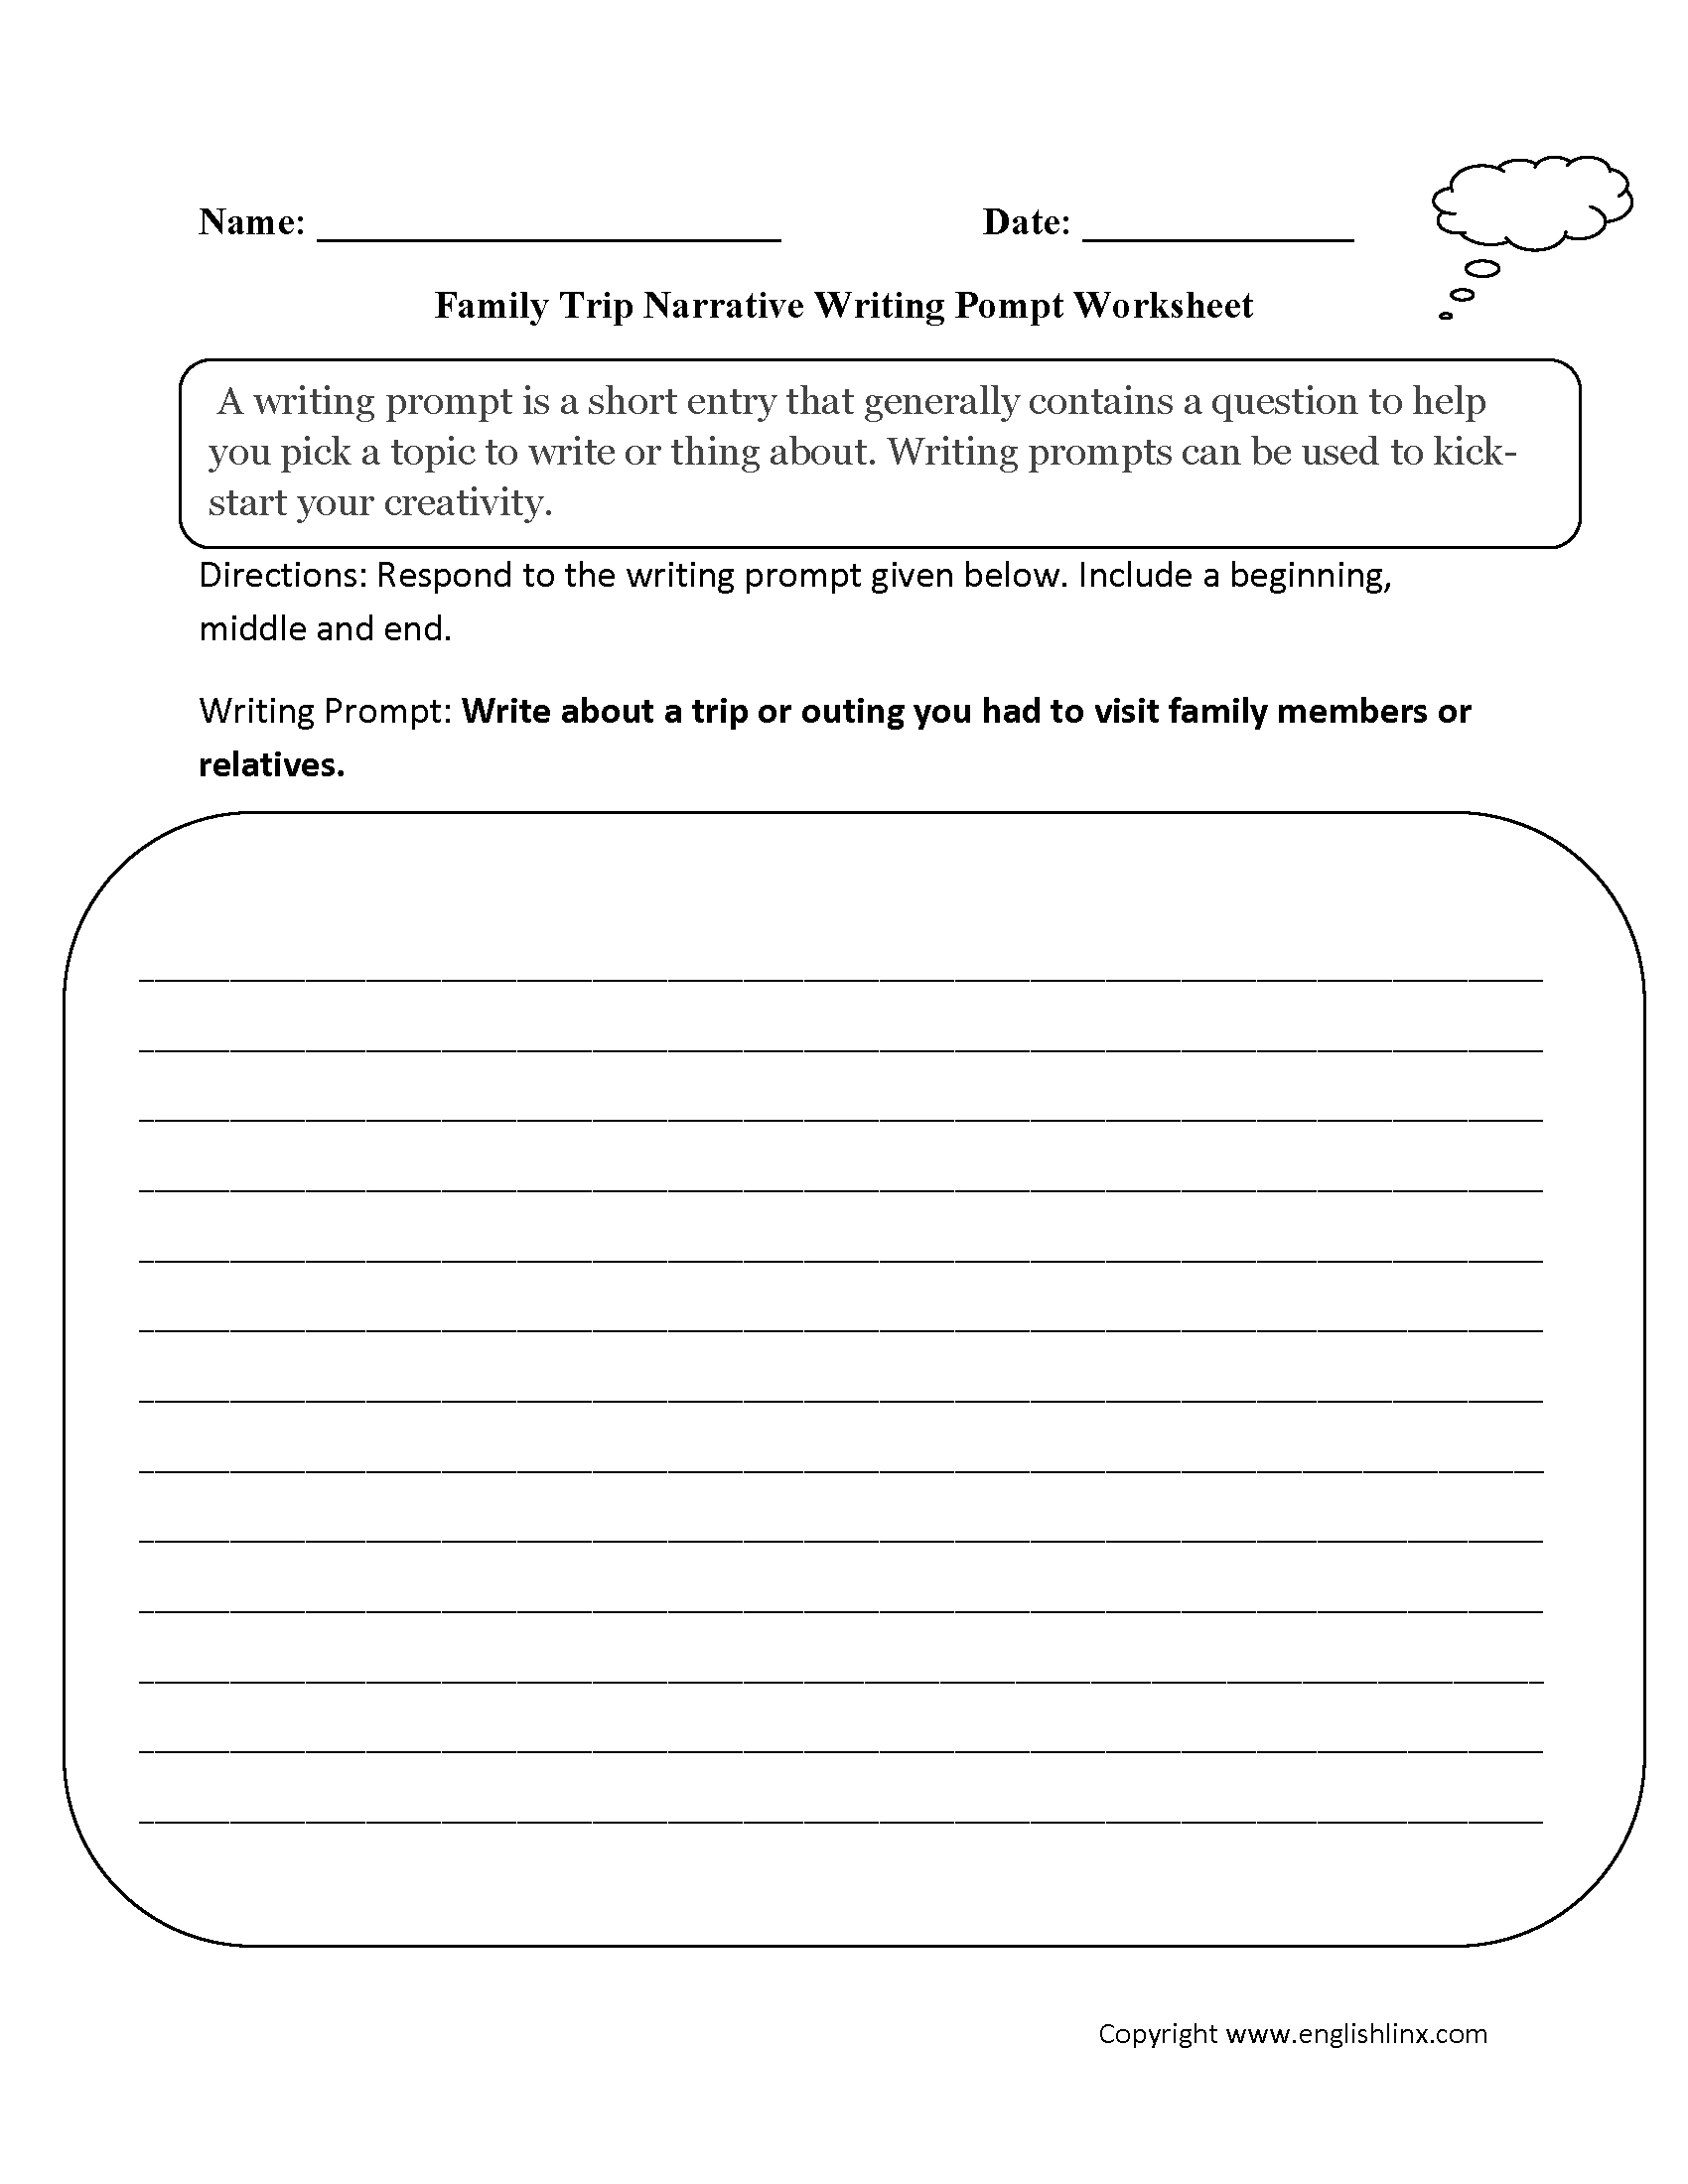 Writing Prompts Worksheets | Narrative Writing Prompts Worksheets | 6Th Grade Writing Worksheets Printable Free